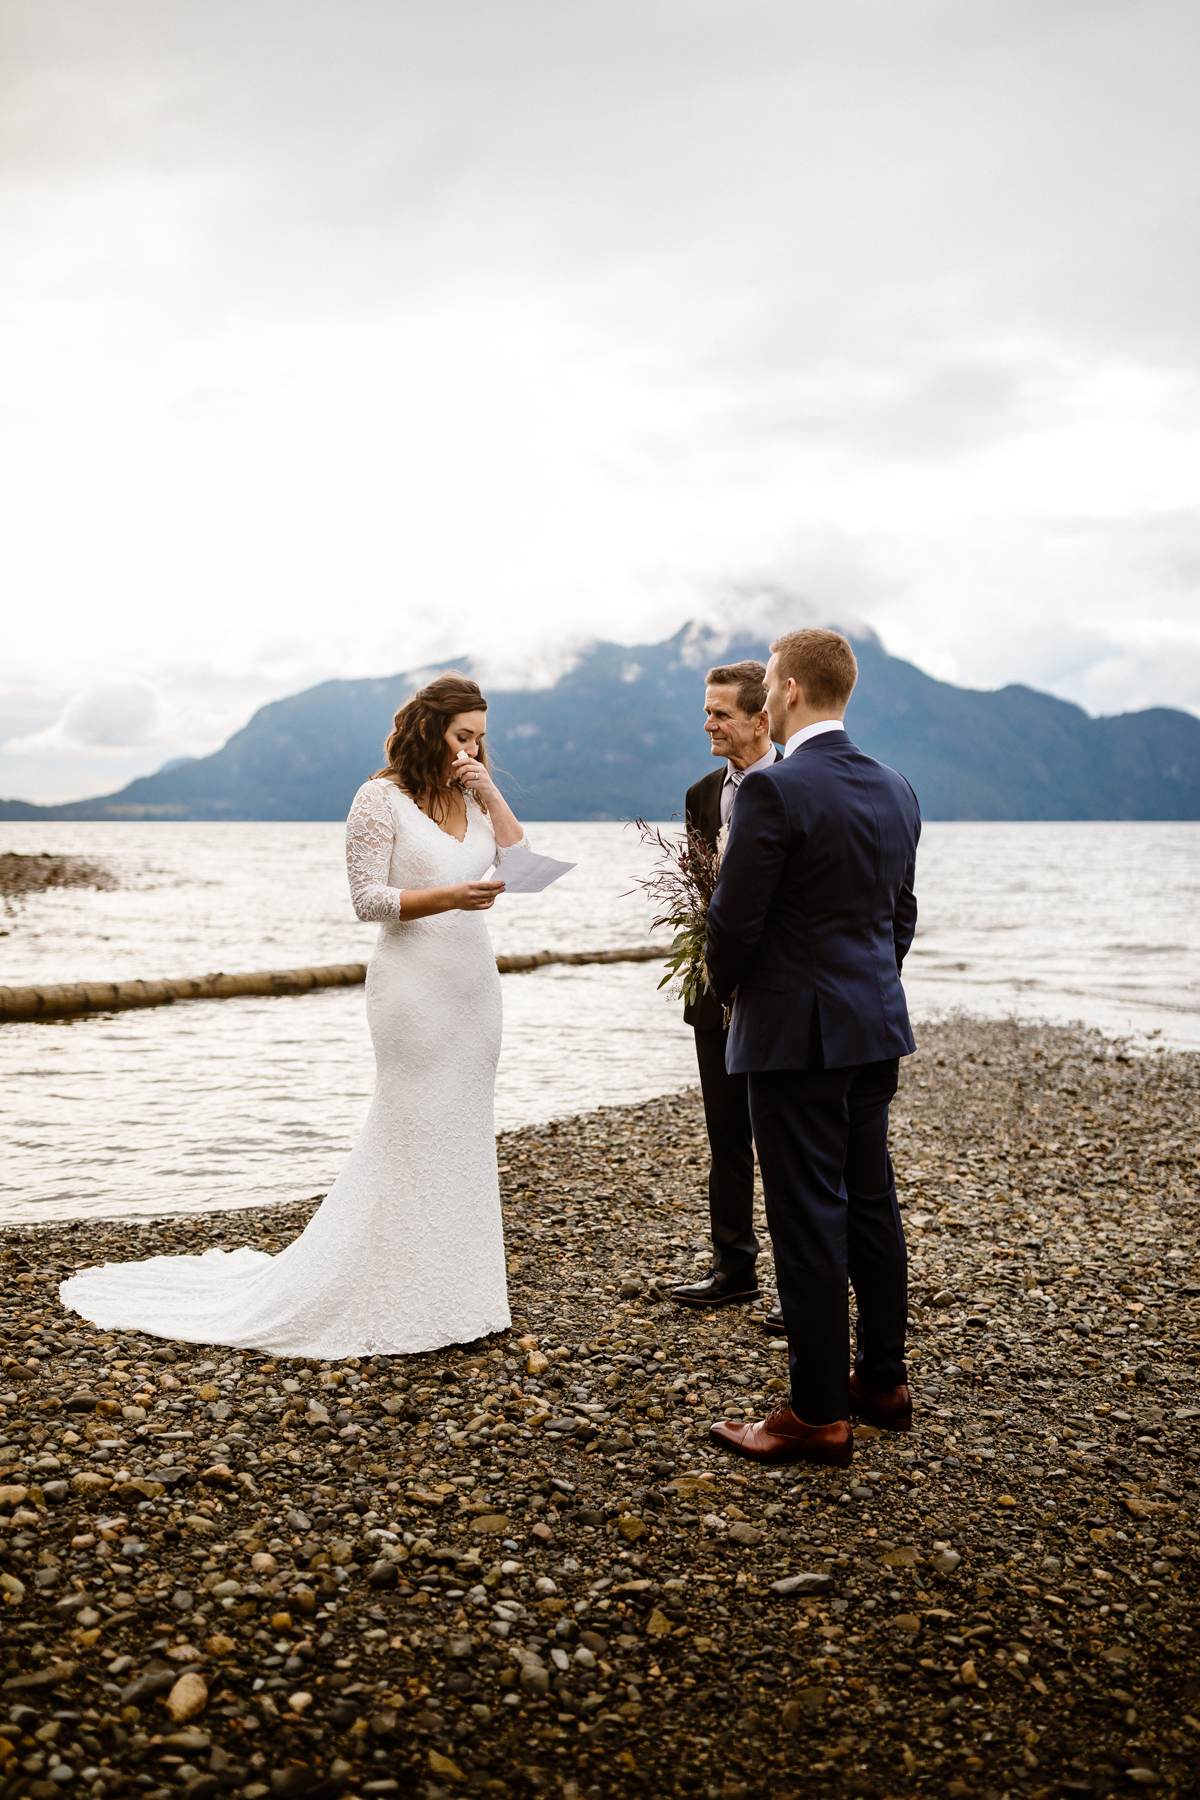 Squamish Wedding Photographers at an Adventurous Elopement - Image 10